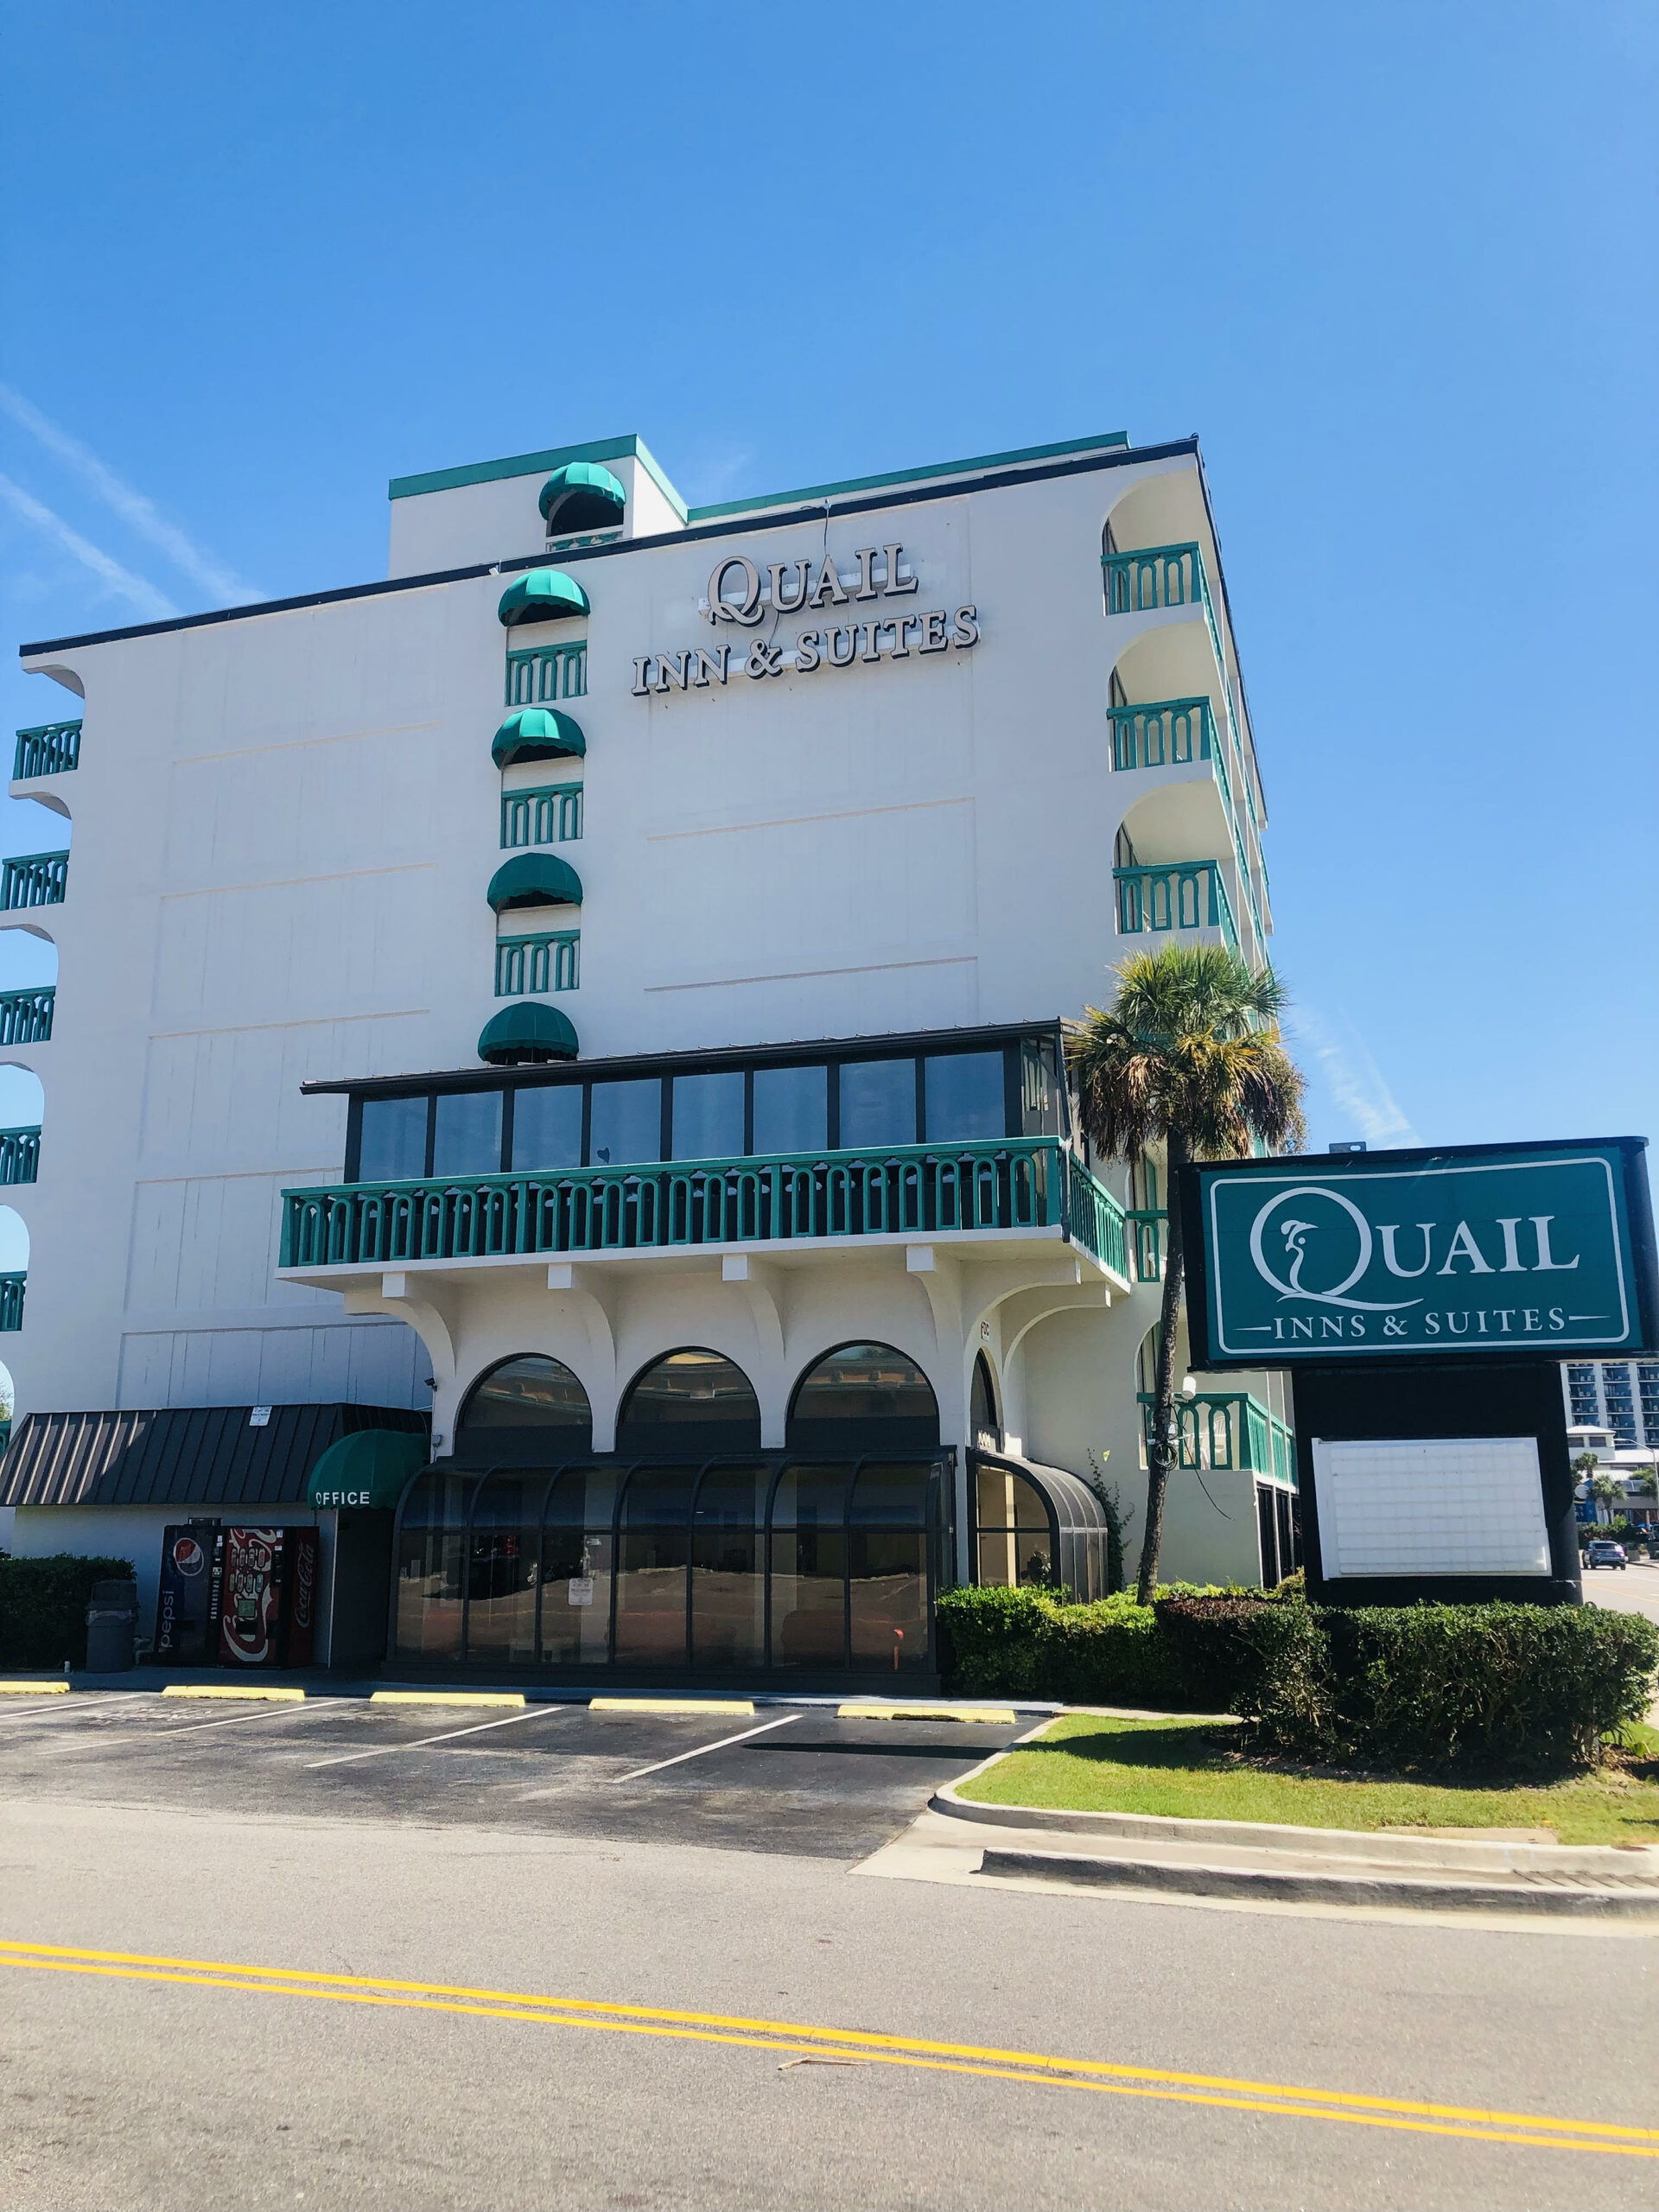 Quail Inn and Suites